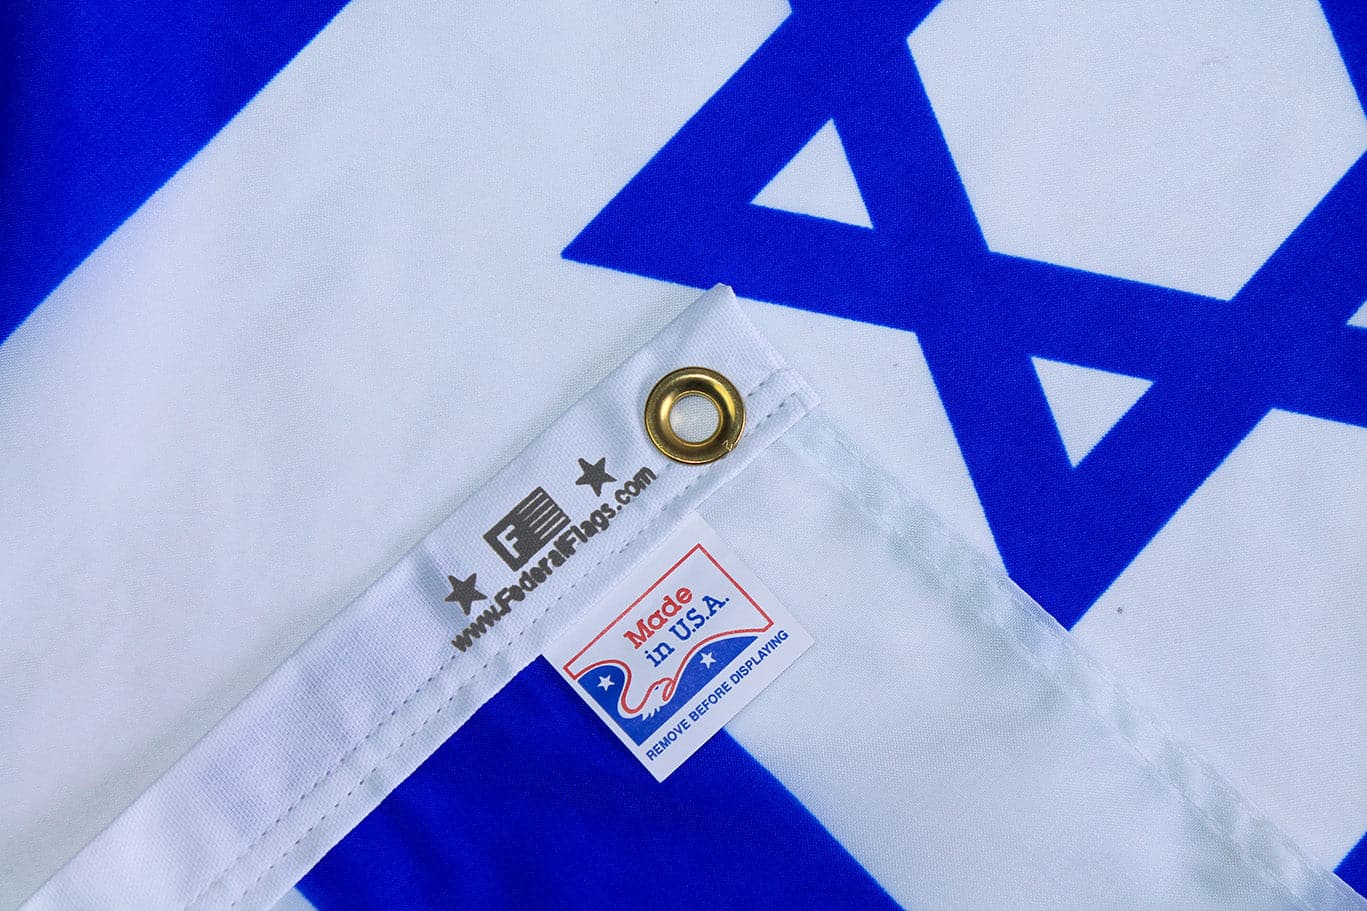 3x5ft Israel Flag